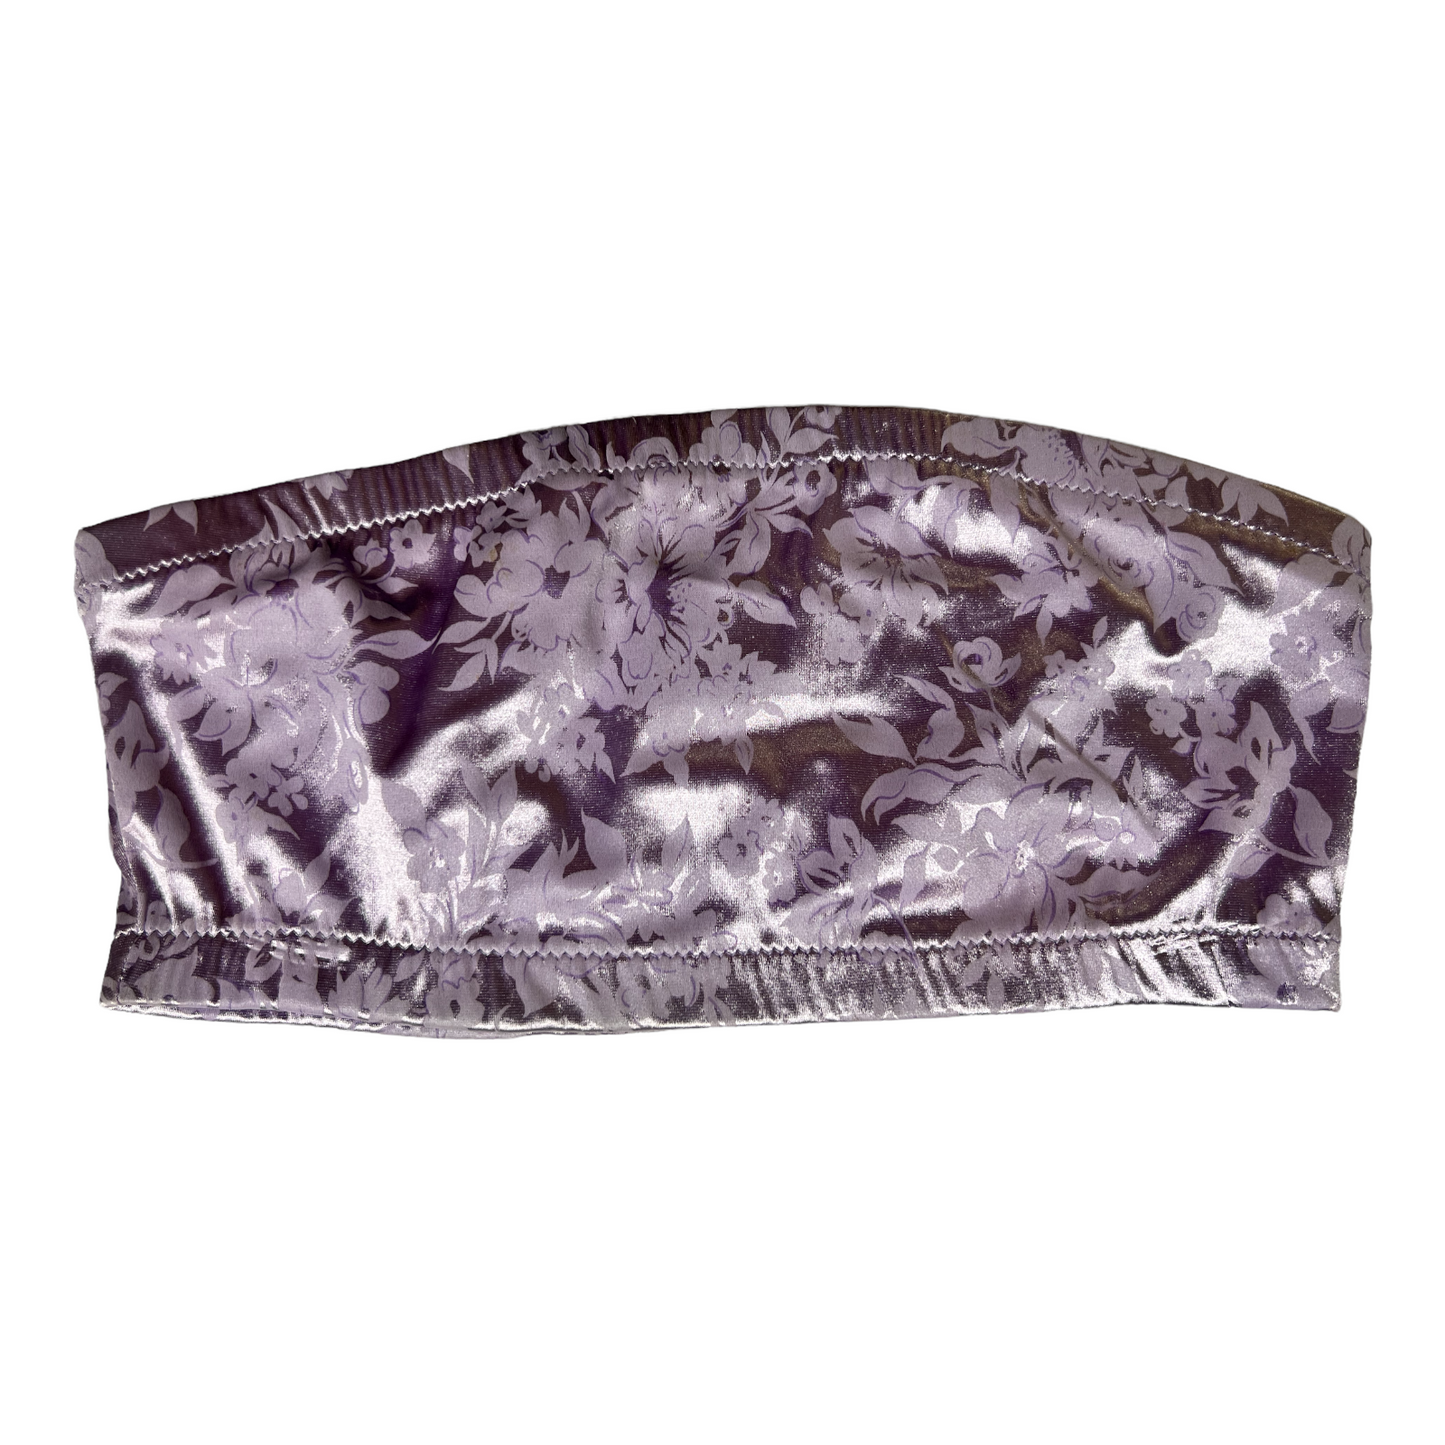 New Extreme Gear Lavender Strapless Bralette Swimwear Top, Size M